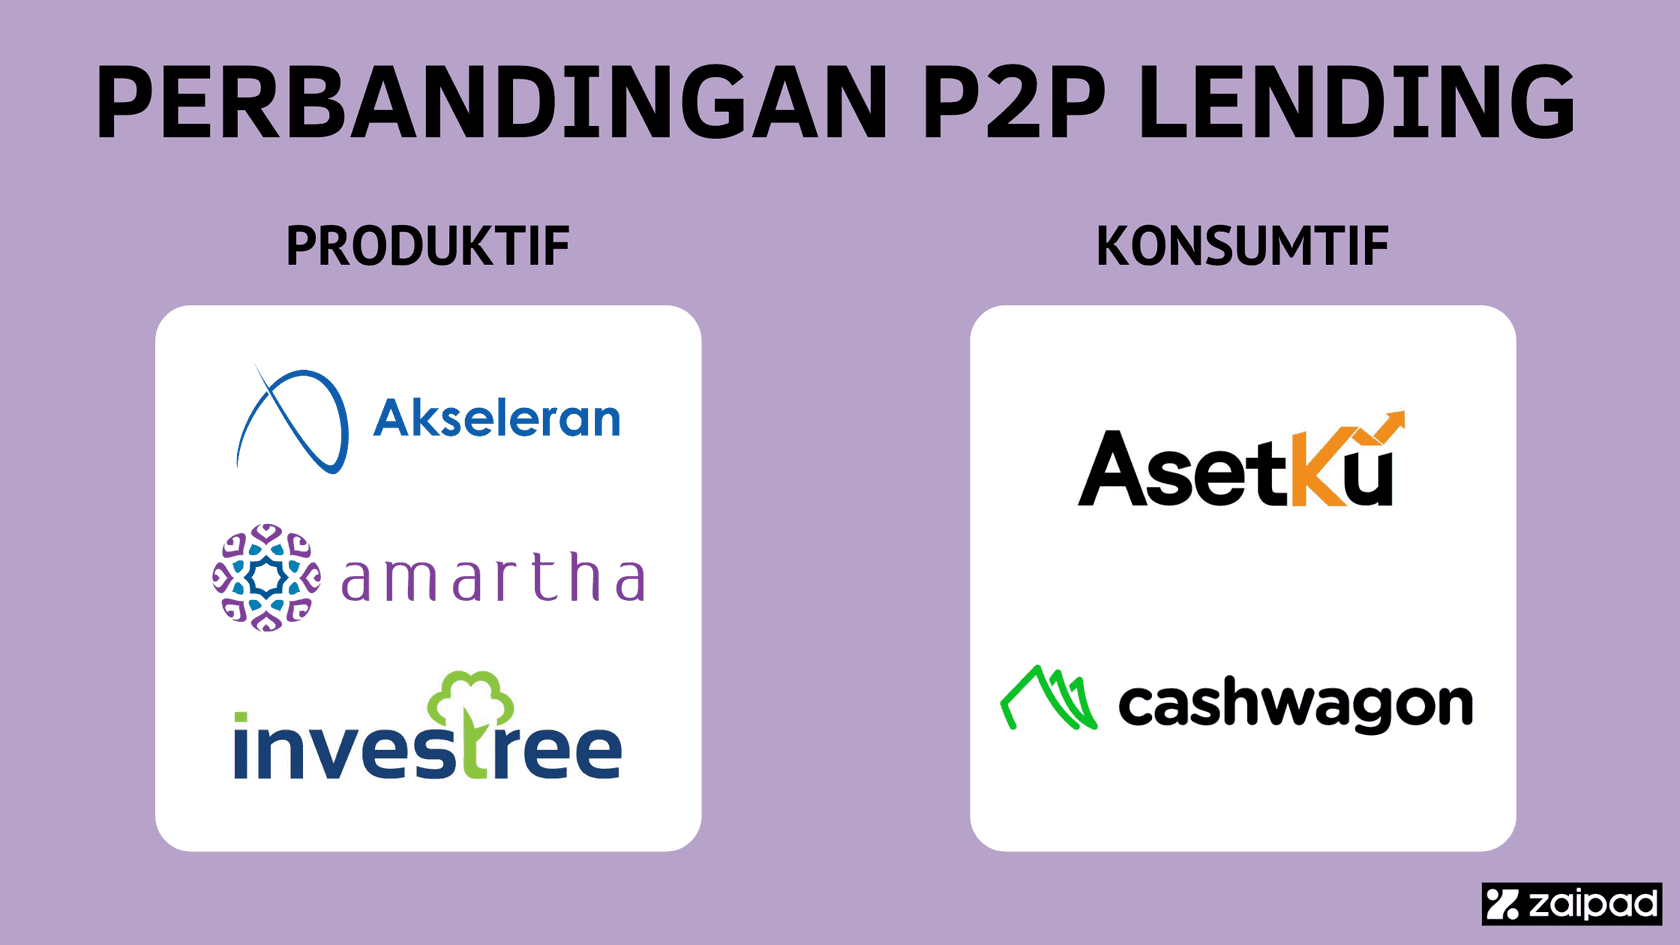 Perbandingan P2P Lending Akseleran Amartha Investree Asetku dan Cashwagon